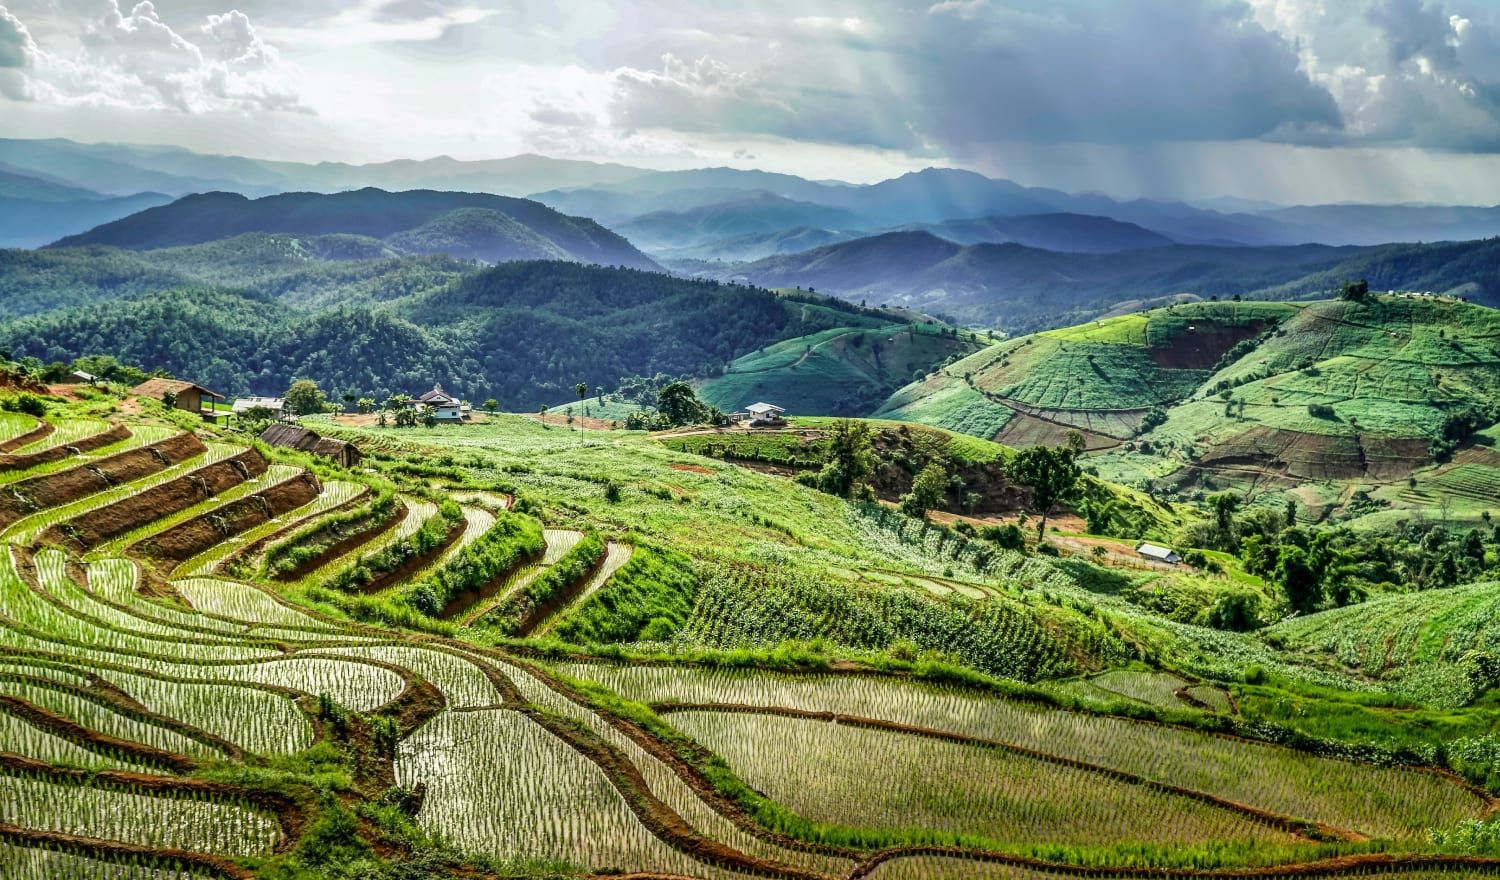 The plush green rice fields of Chiang Mai.